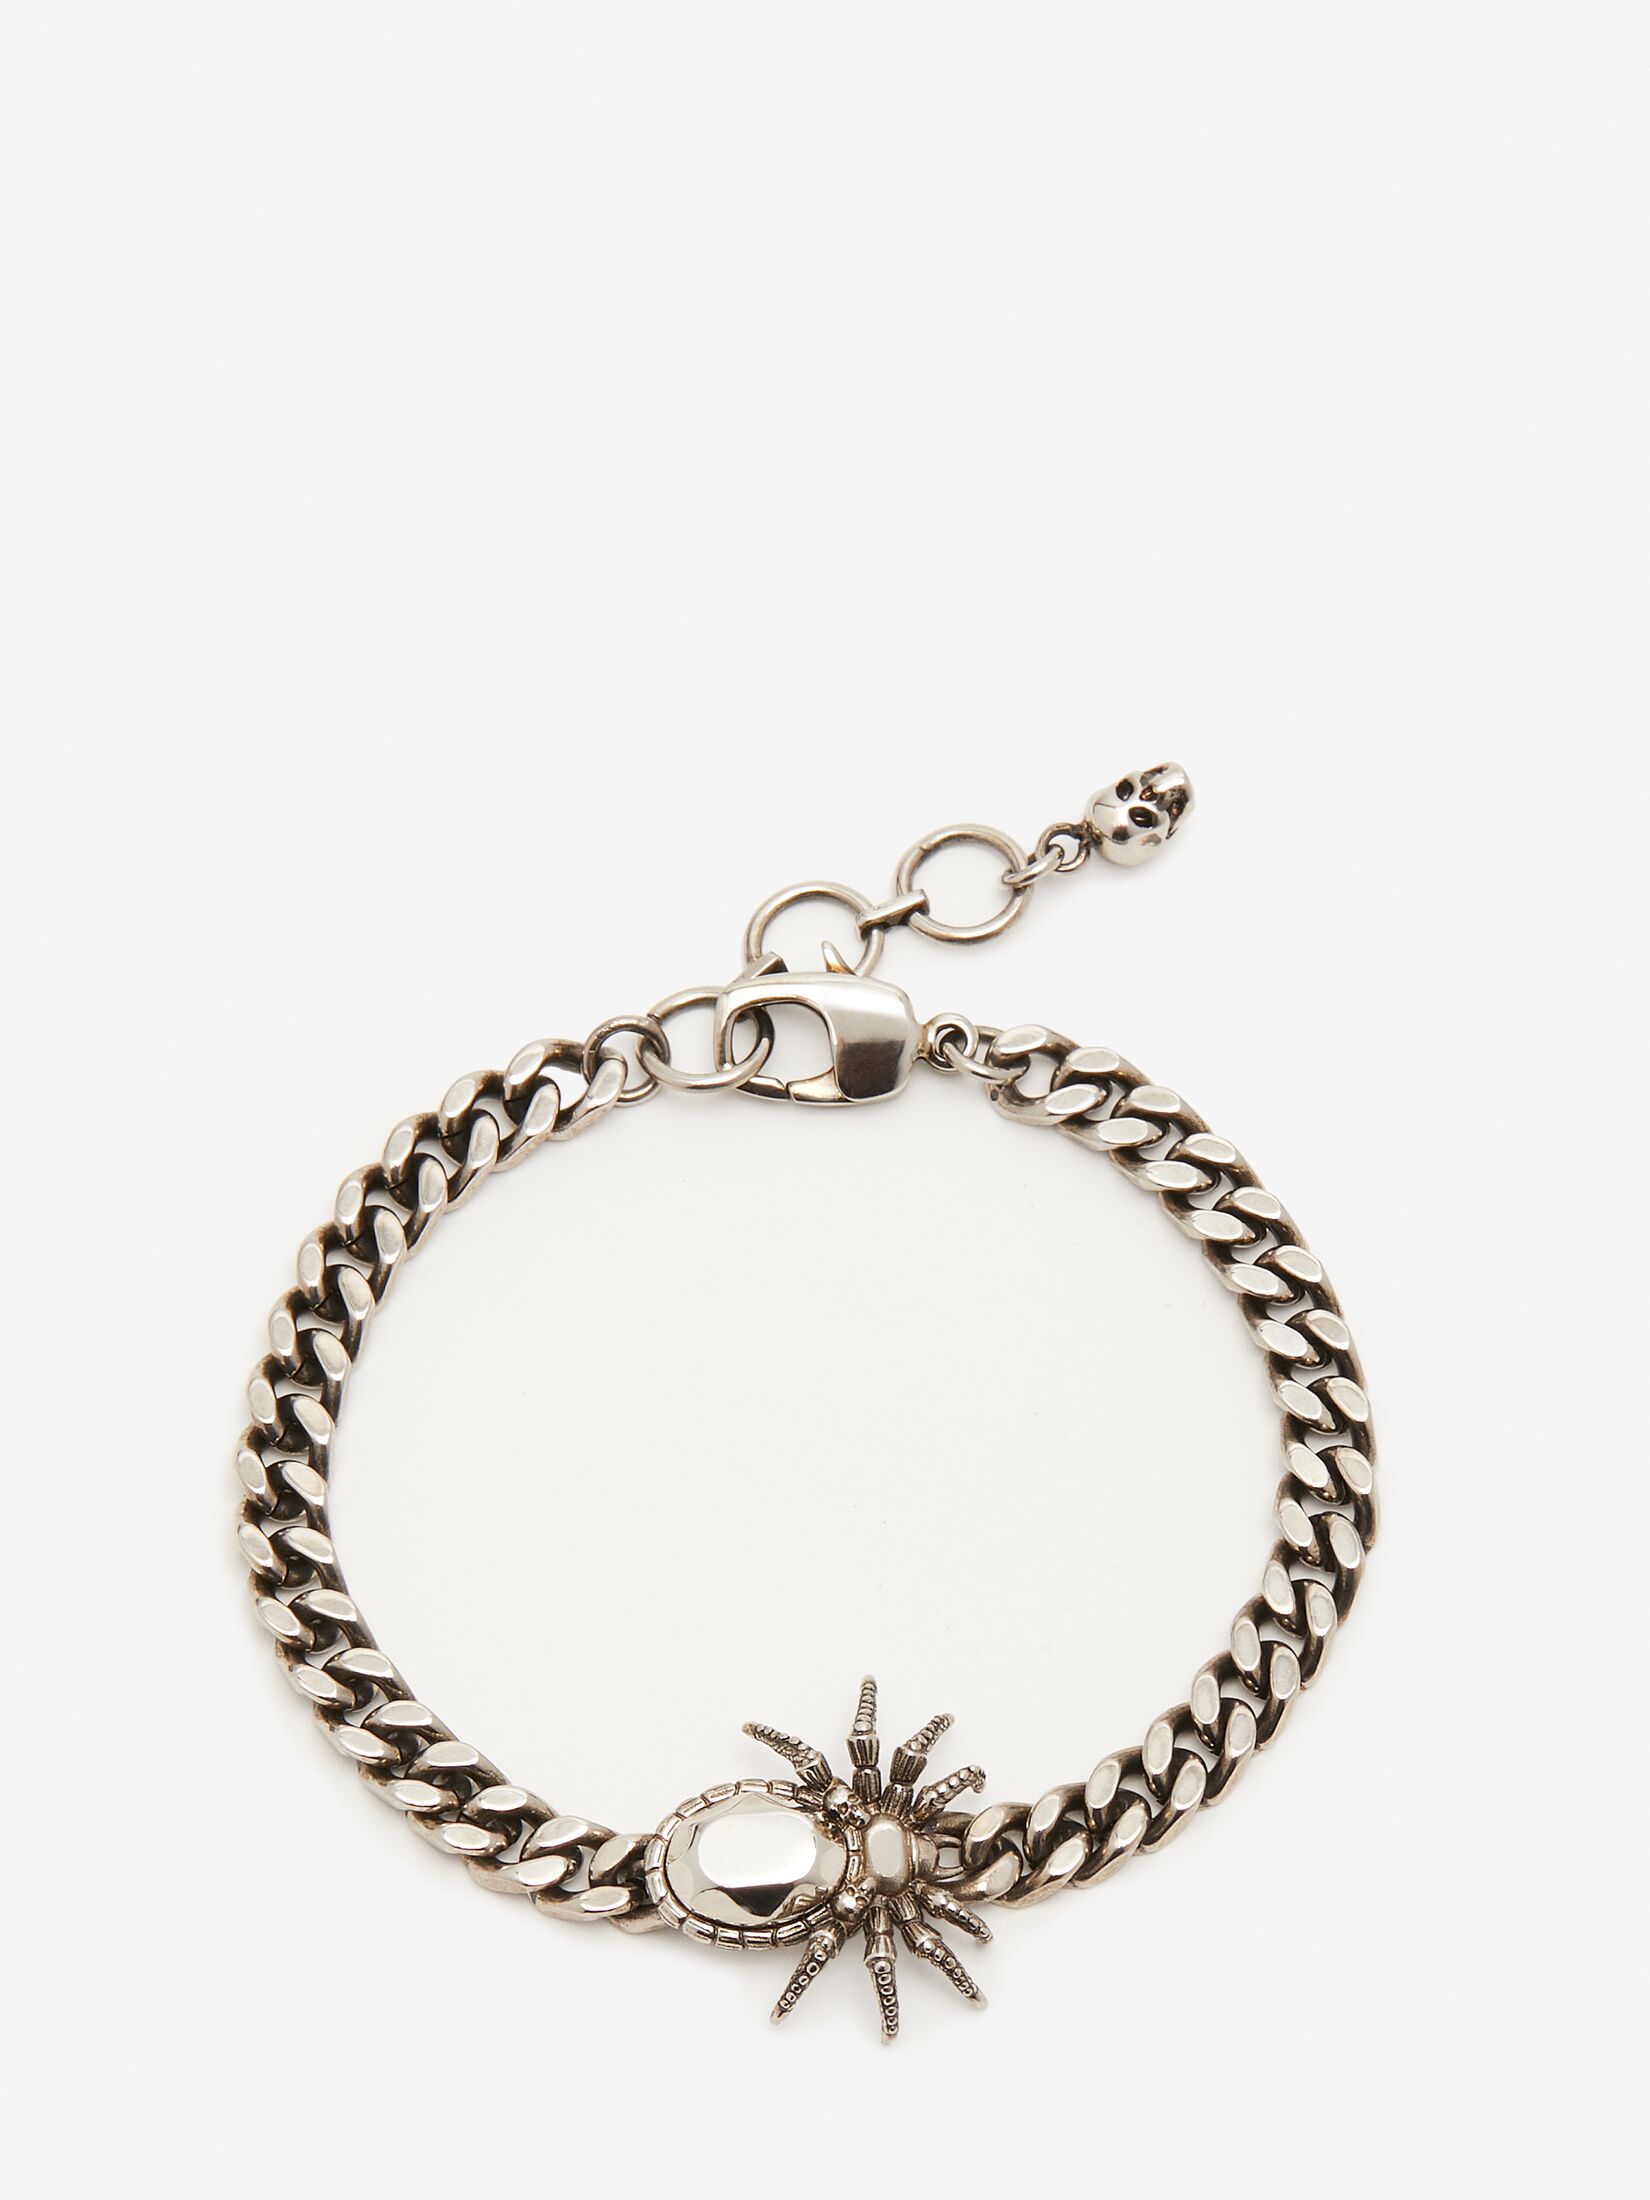 Spider Chain Bracelet